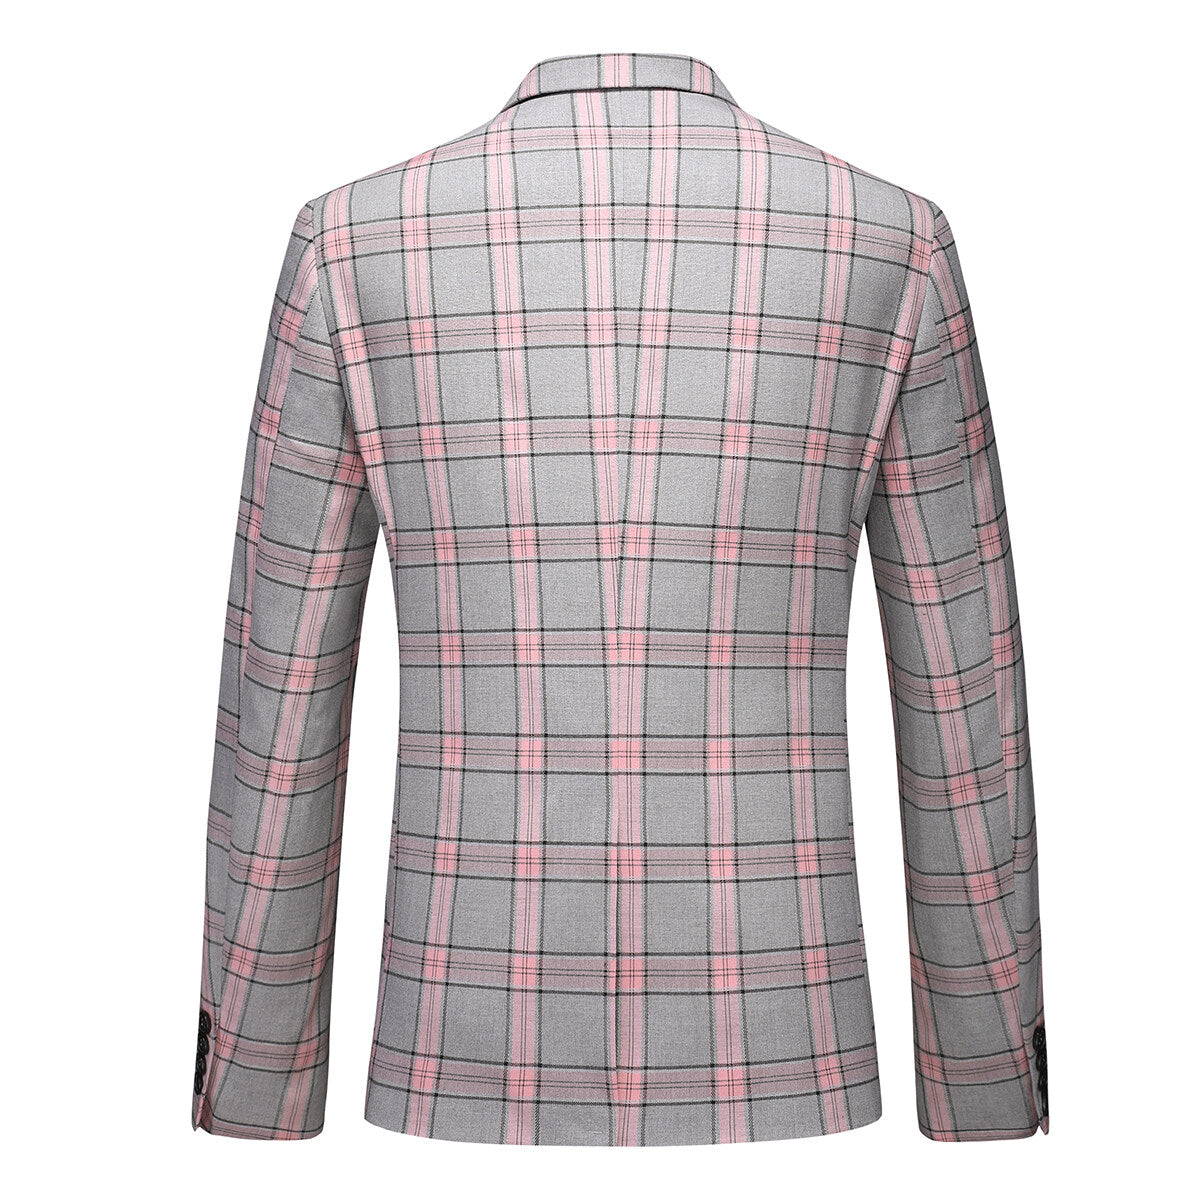 Men's Plaid Notch Lapel Collar One Button Blazer Pink